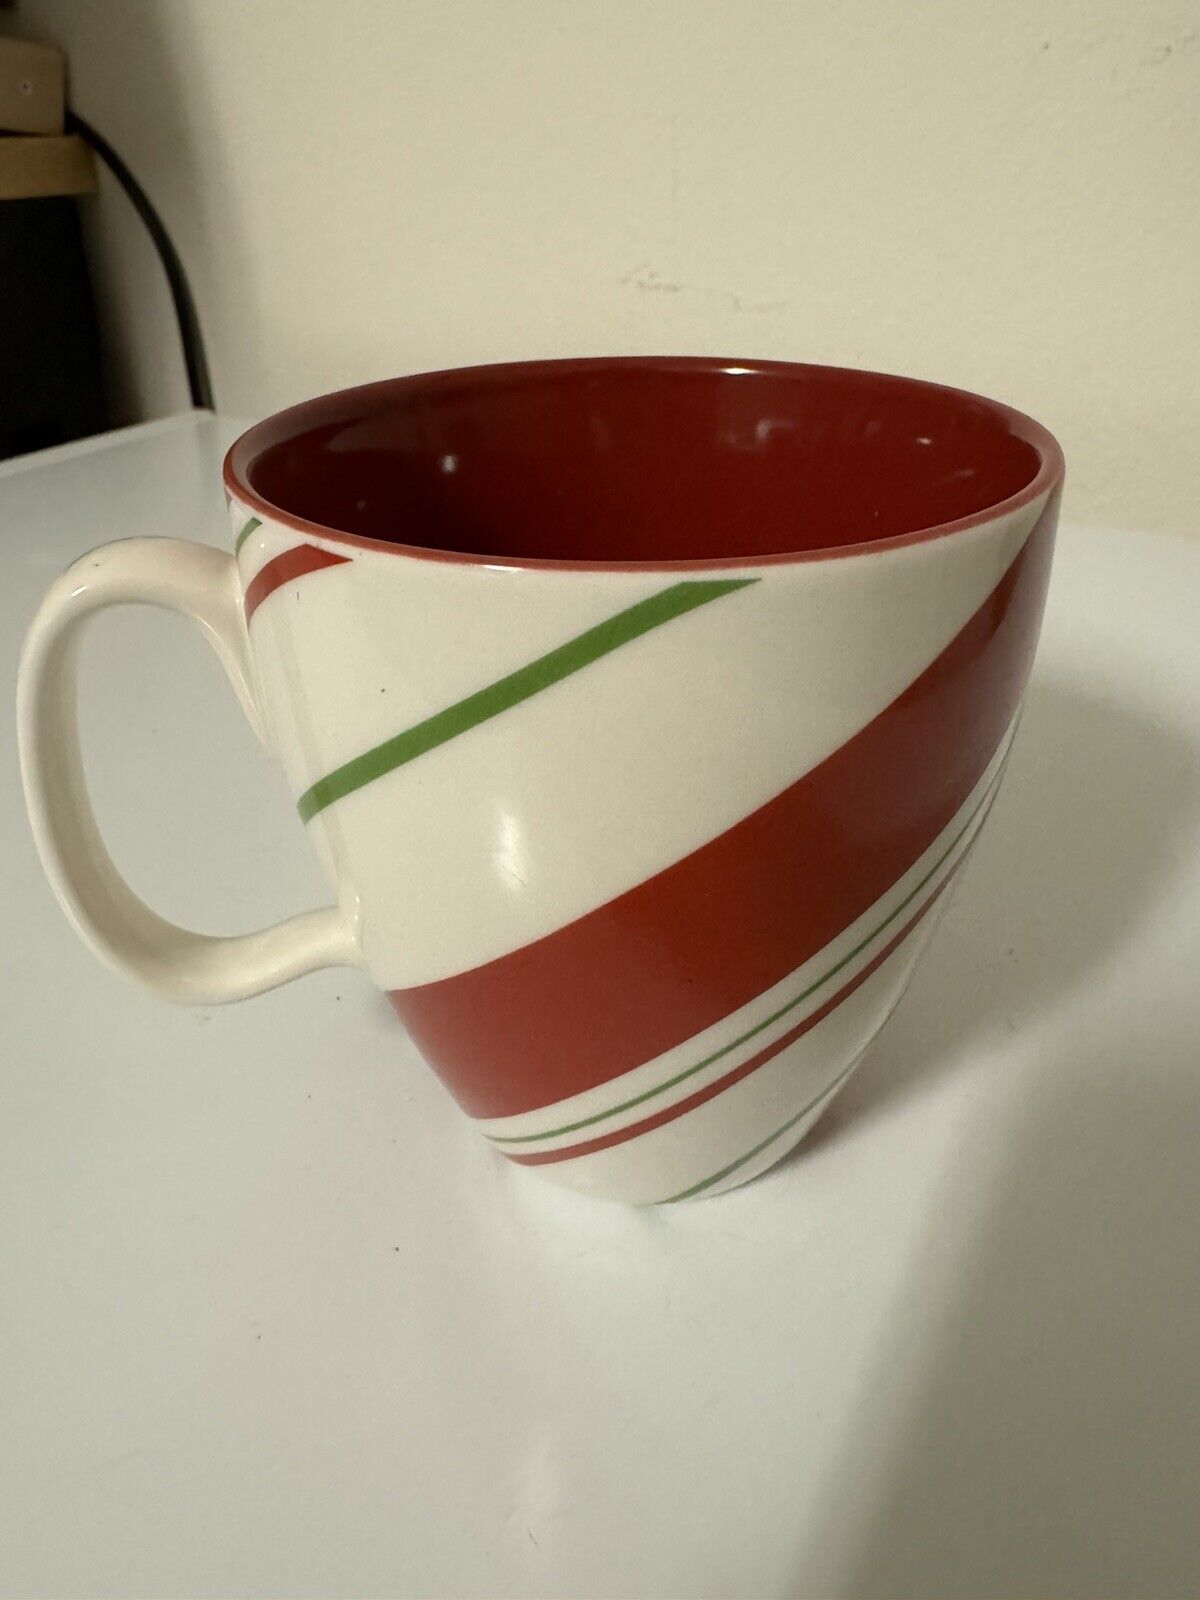 2007 Holiday STARBUCKS Coffee Mug Peppermint Swirl Design 12 oz Red White Green